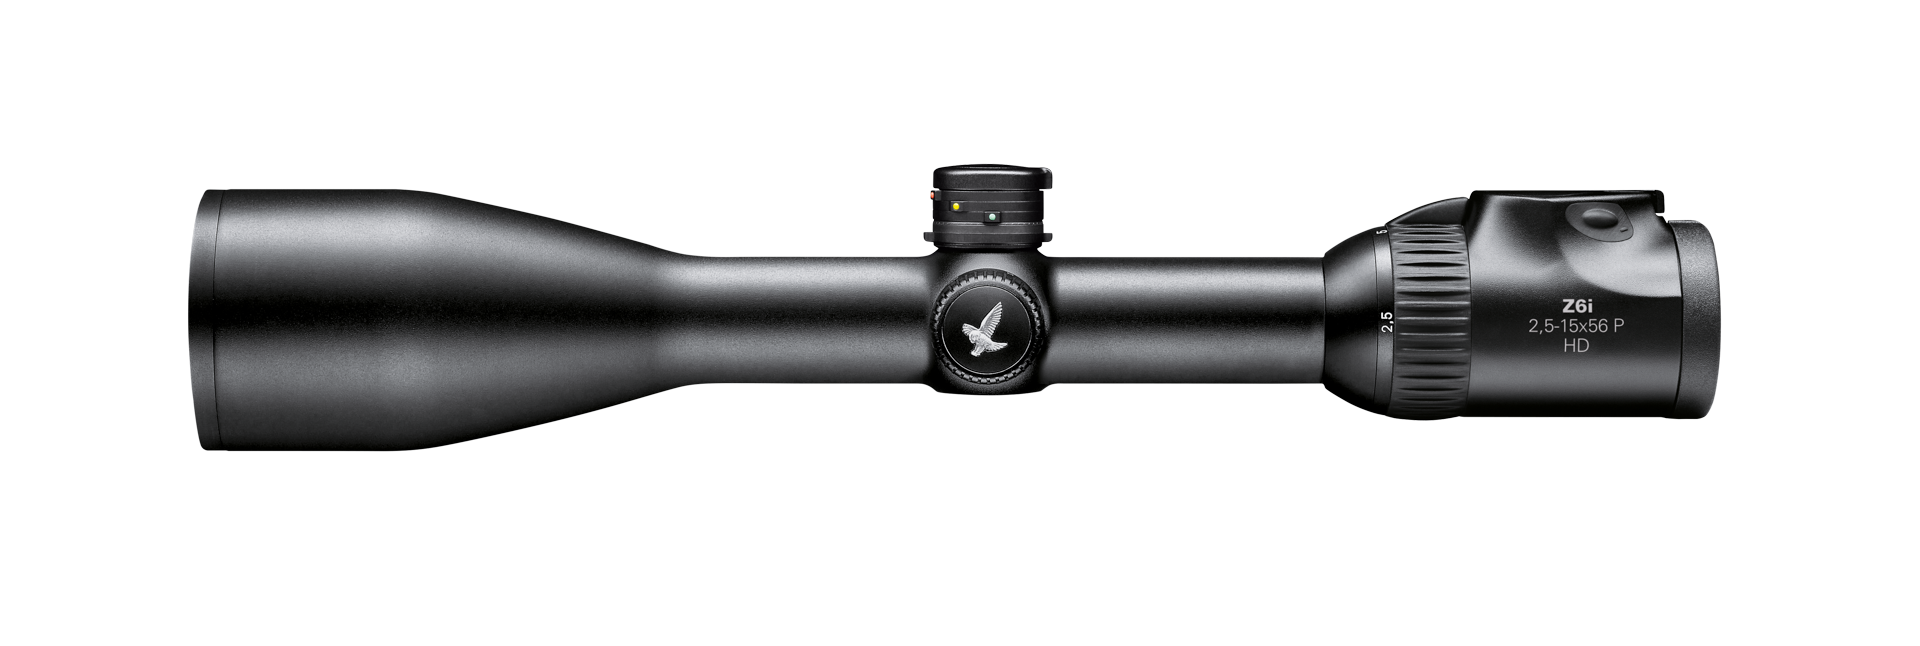 Swarovski Optik Rifle scopes  Z6i 2 5 15x56 P BT